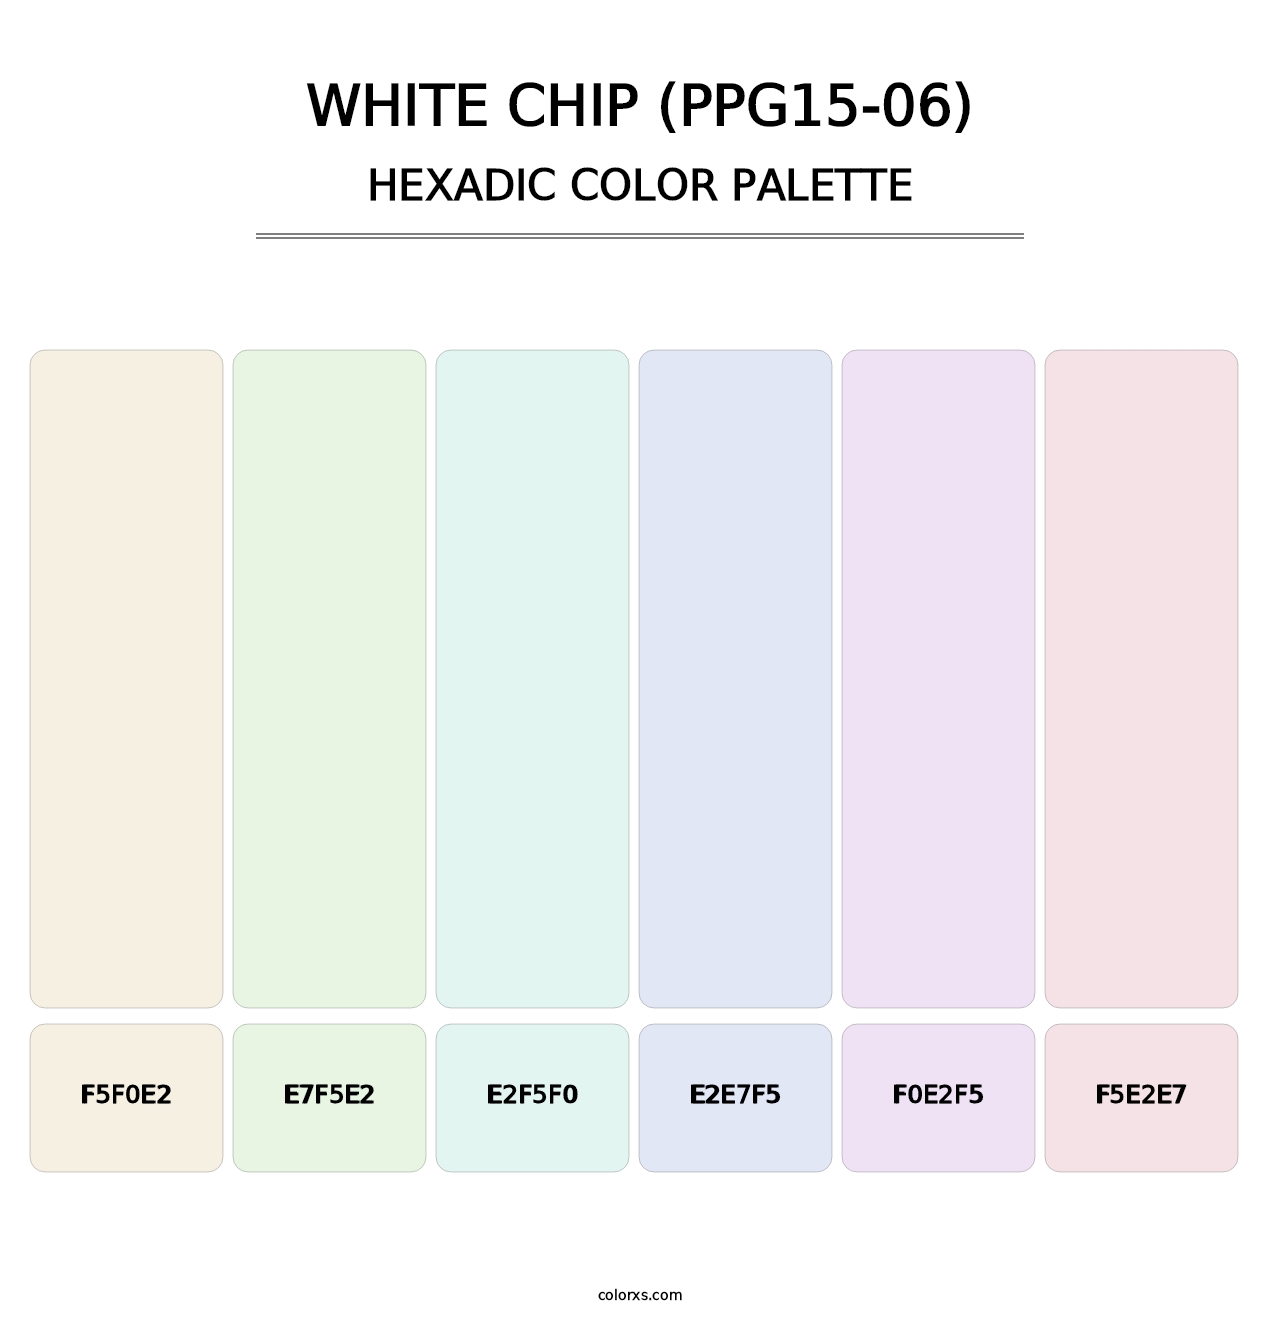 White Chip (PPG15-06) - Hexadic Color Palette